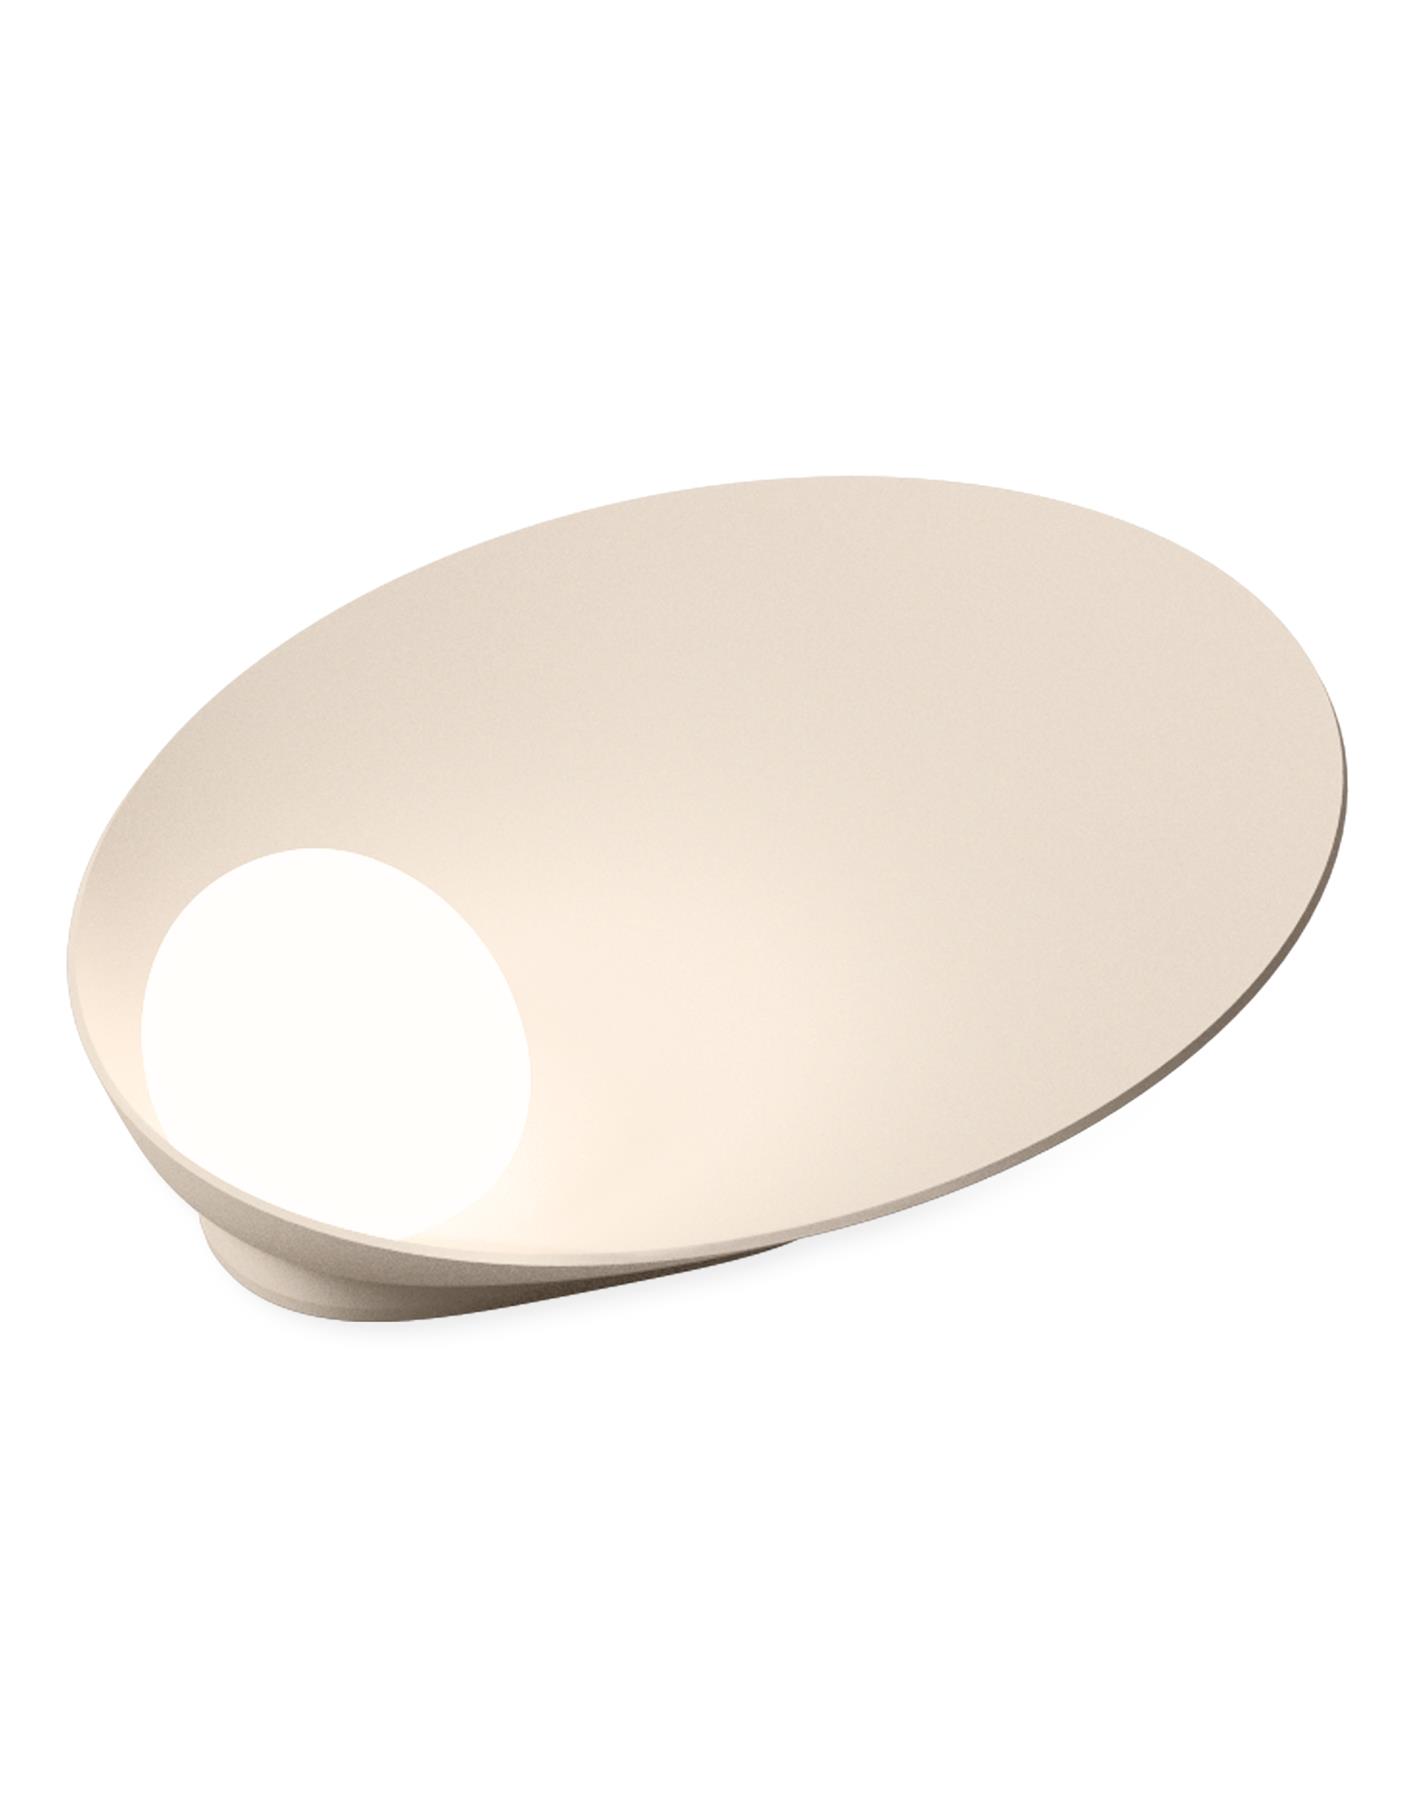 Musa Table Light 7402 White